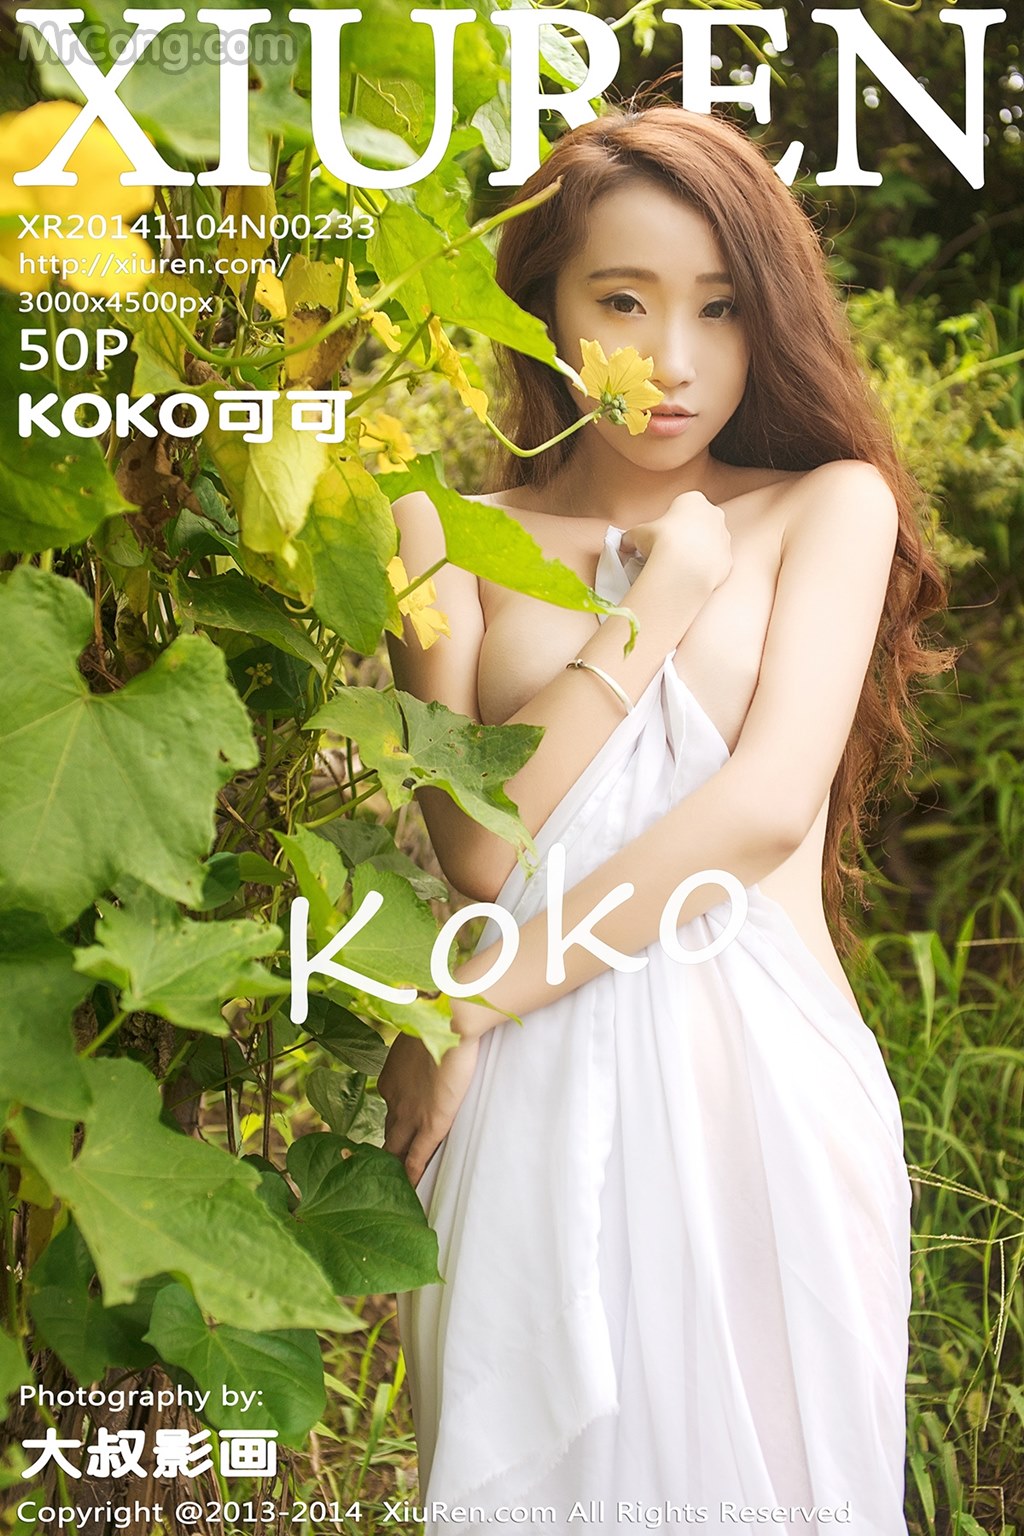 XIUREN No. 22: KOKO Model (可可) (51 photos) photo 1-0